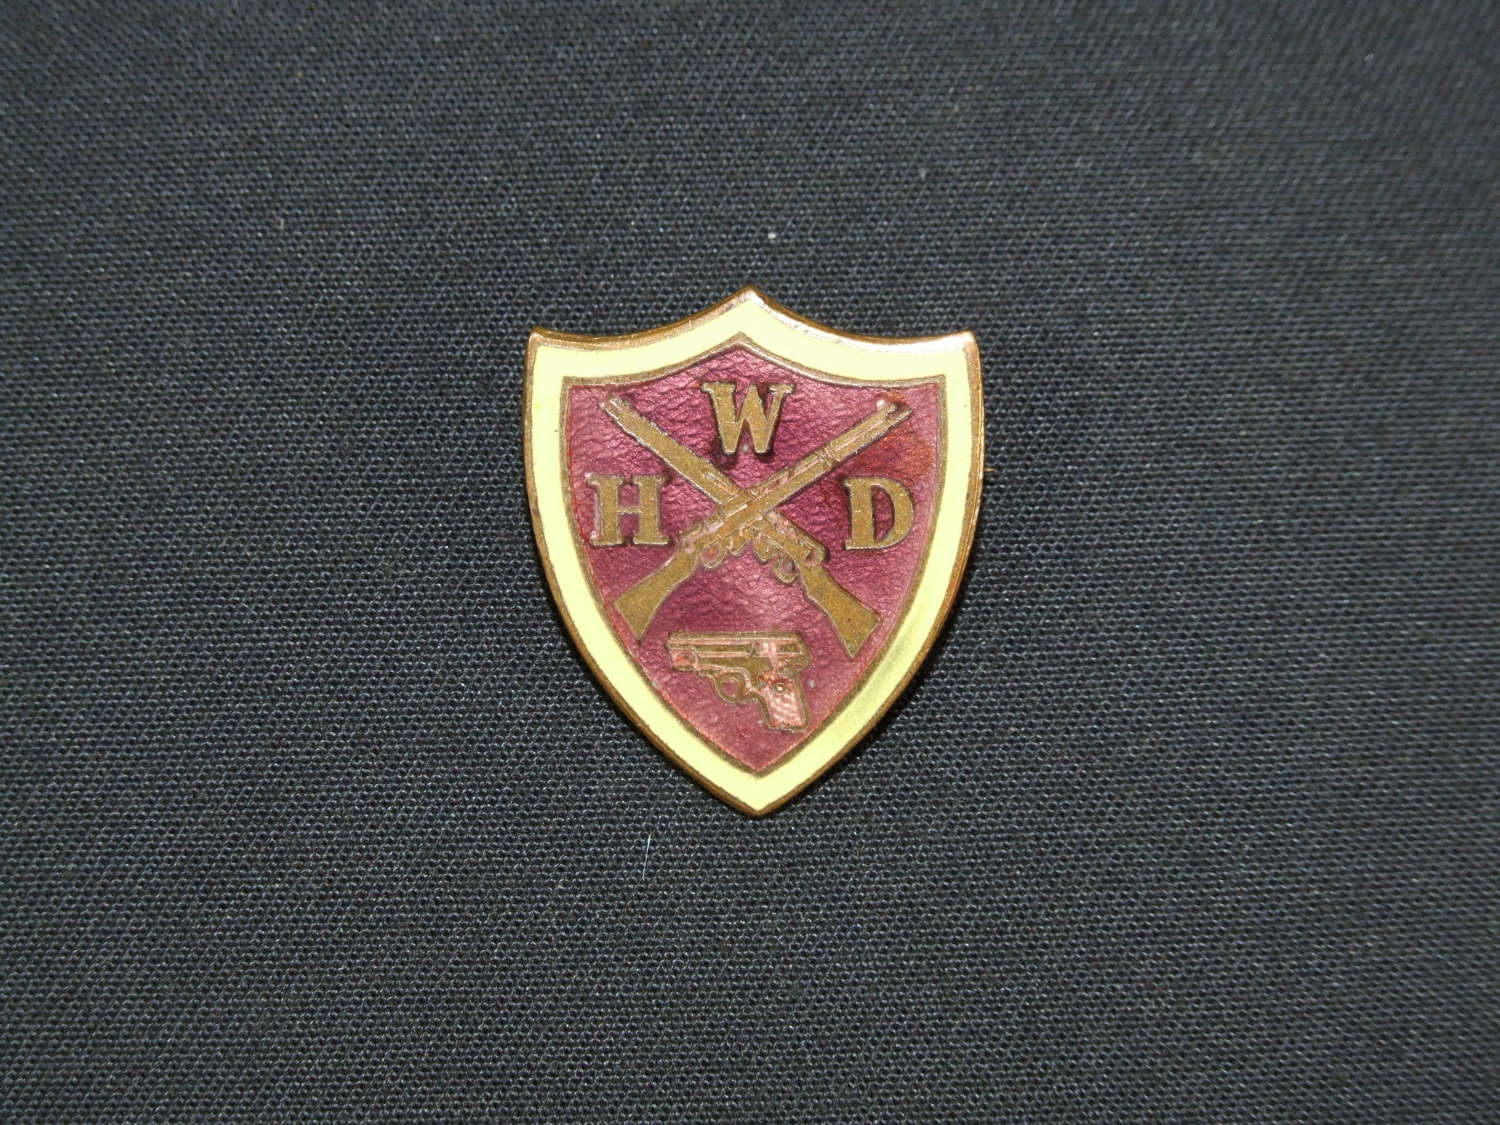 Women’s Home Defence badge, WW2 (1940-1943)